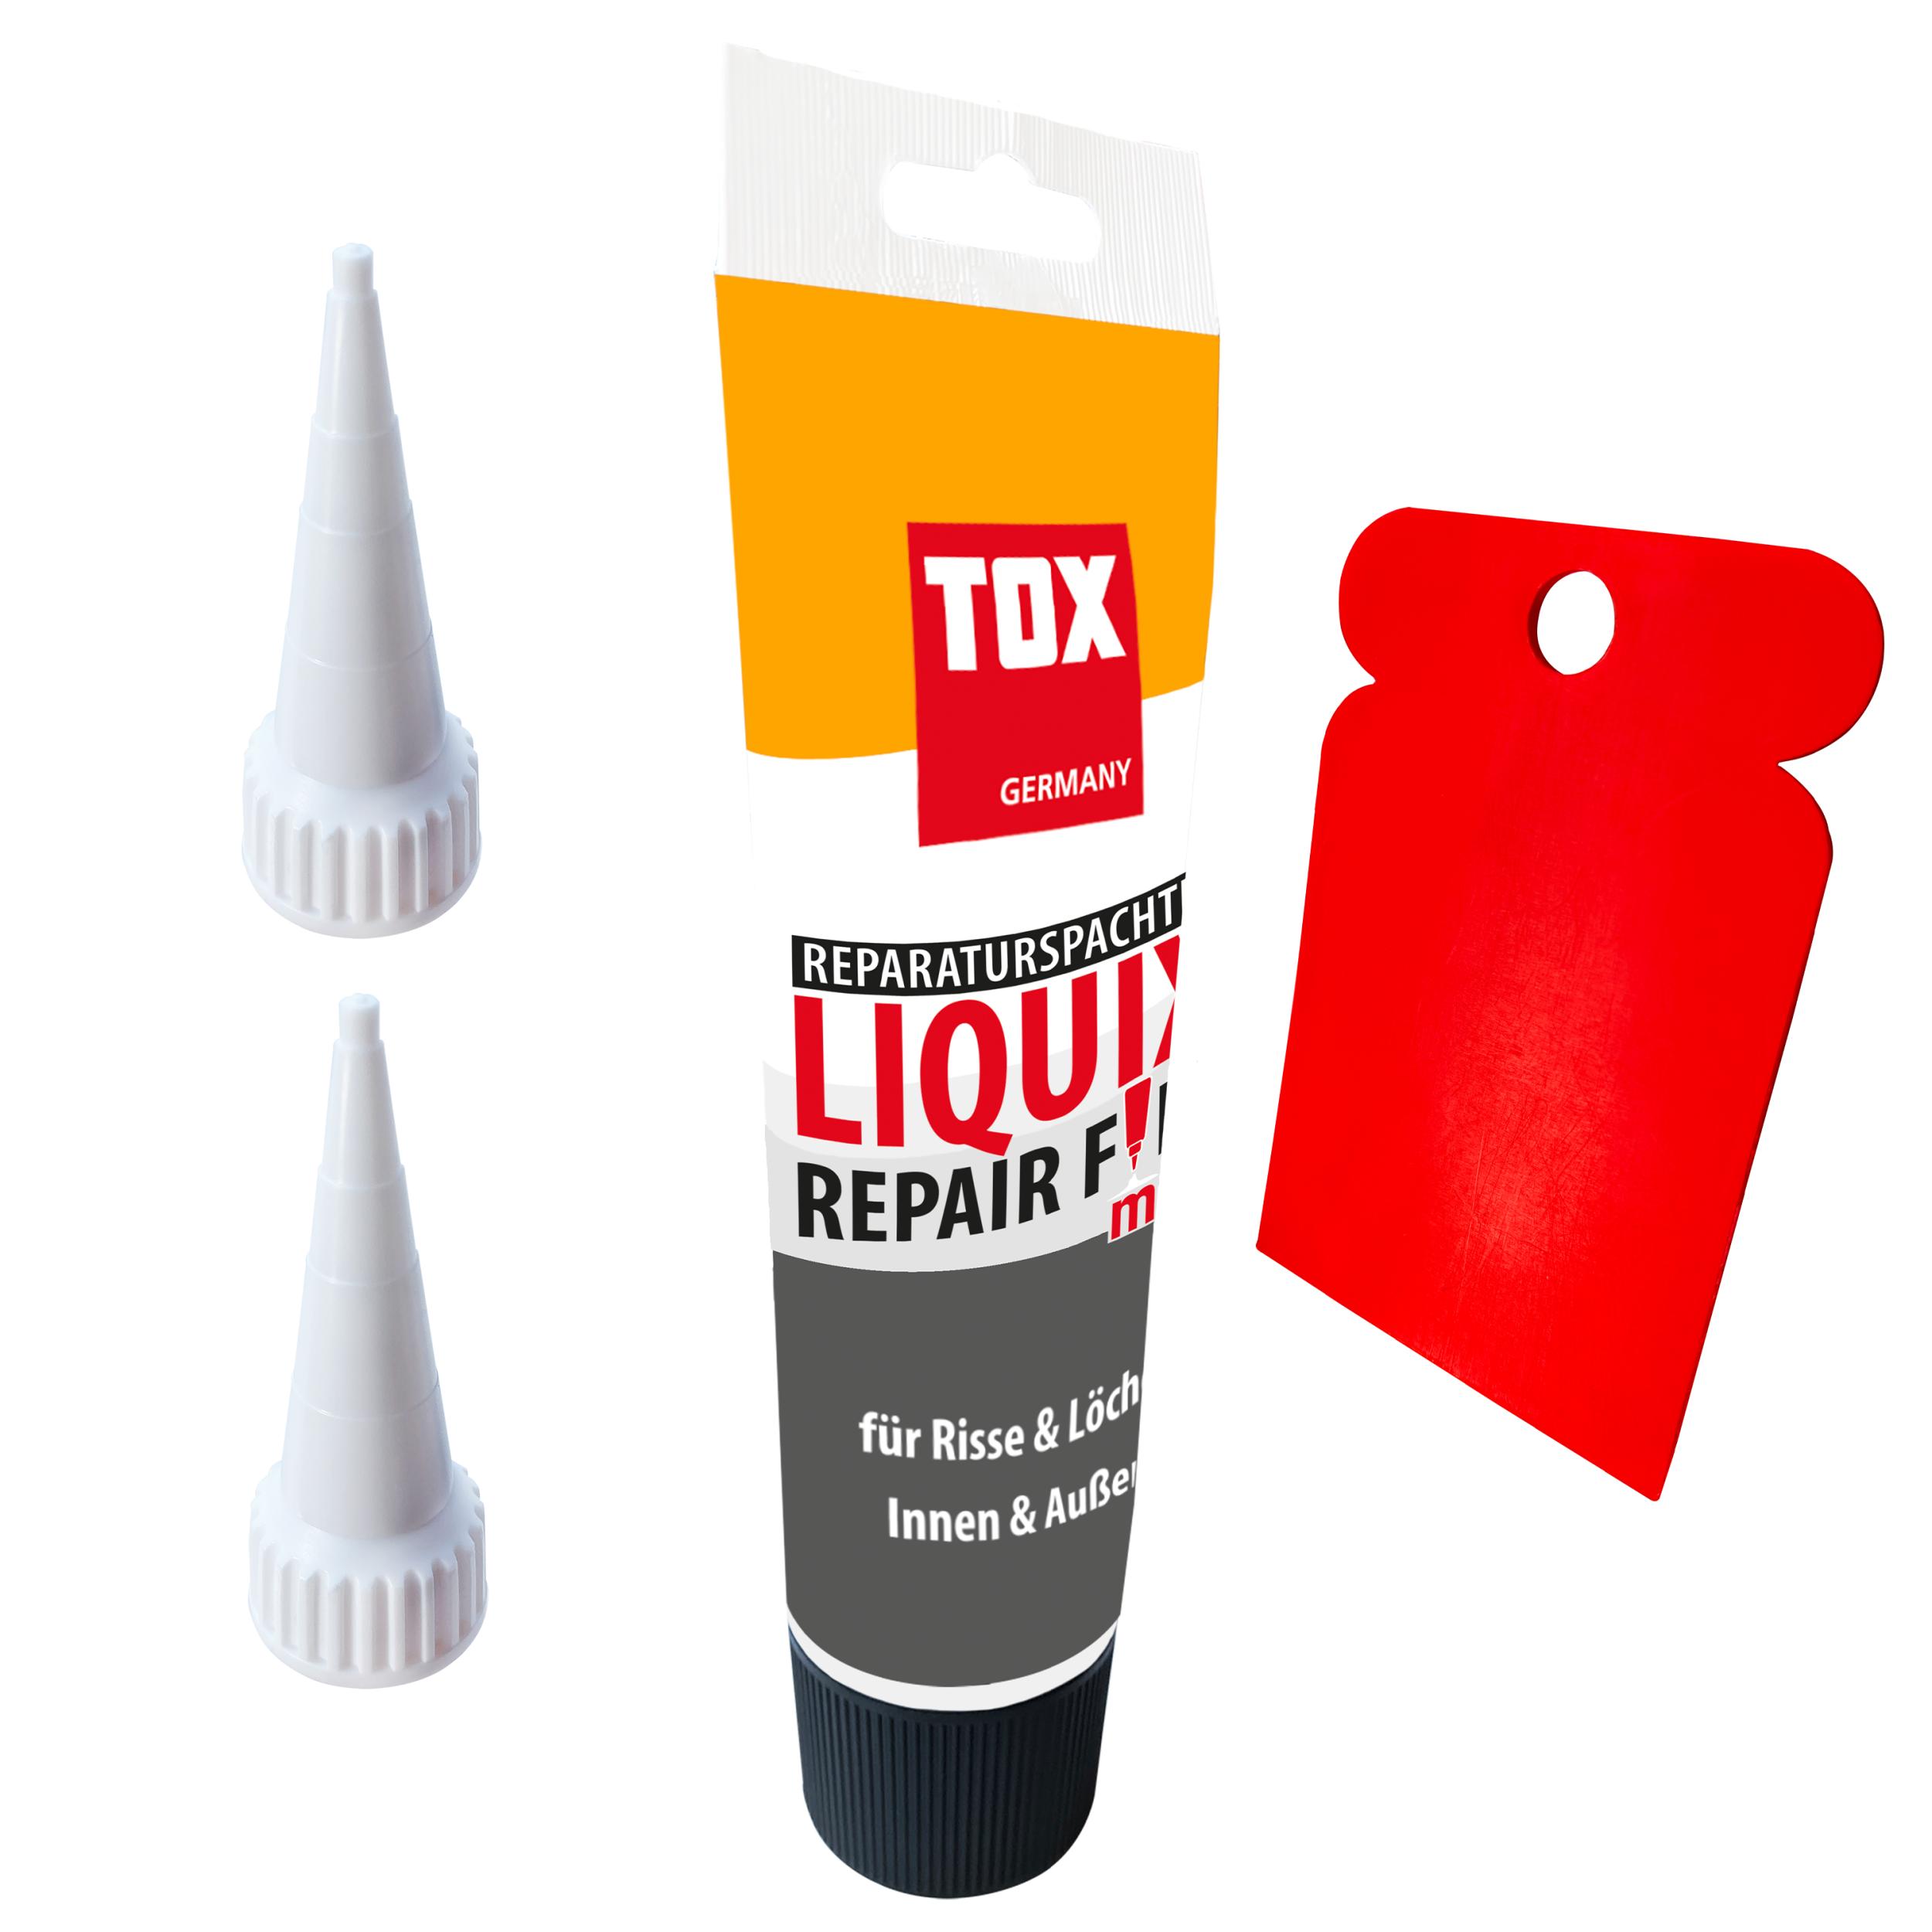 TOX Reparaturspachtel Liquix Repair-Fill mini, 70 Gramm